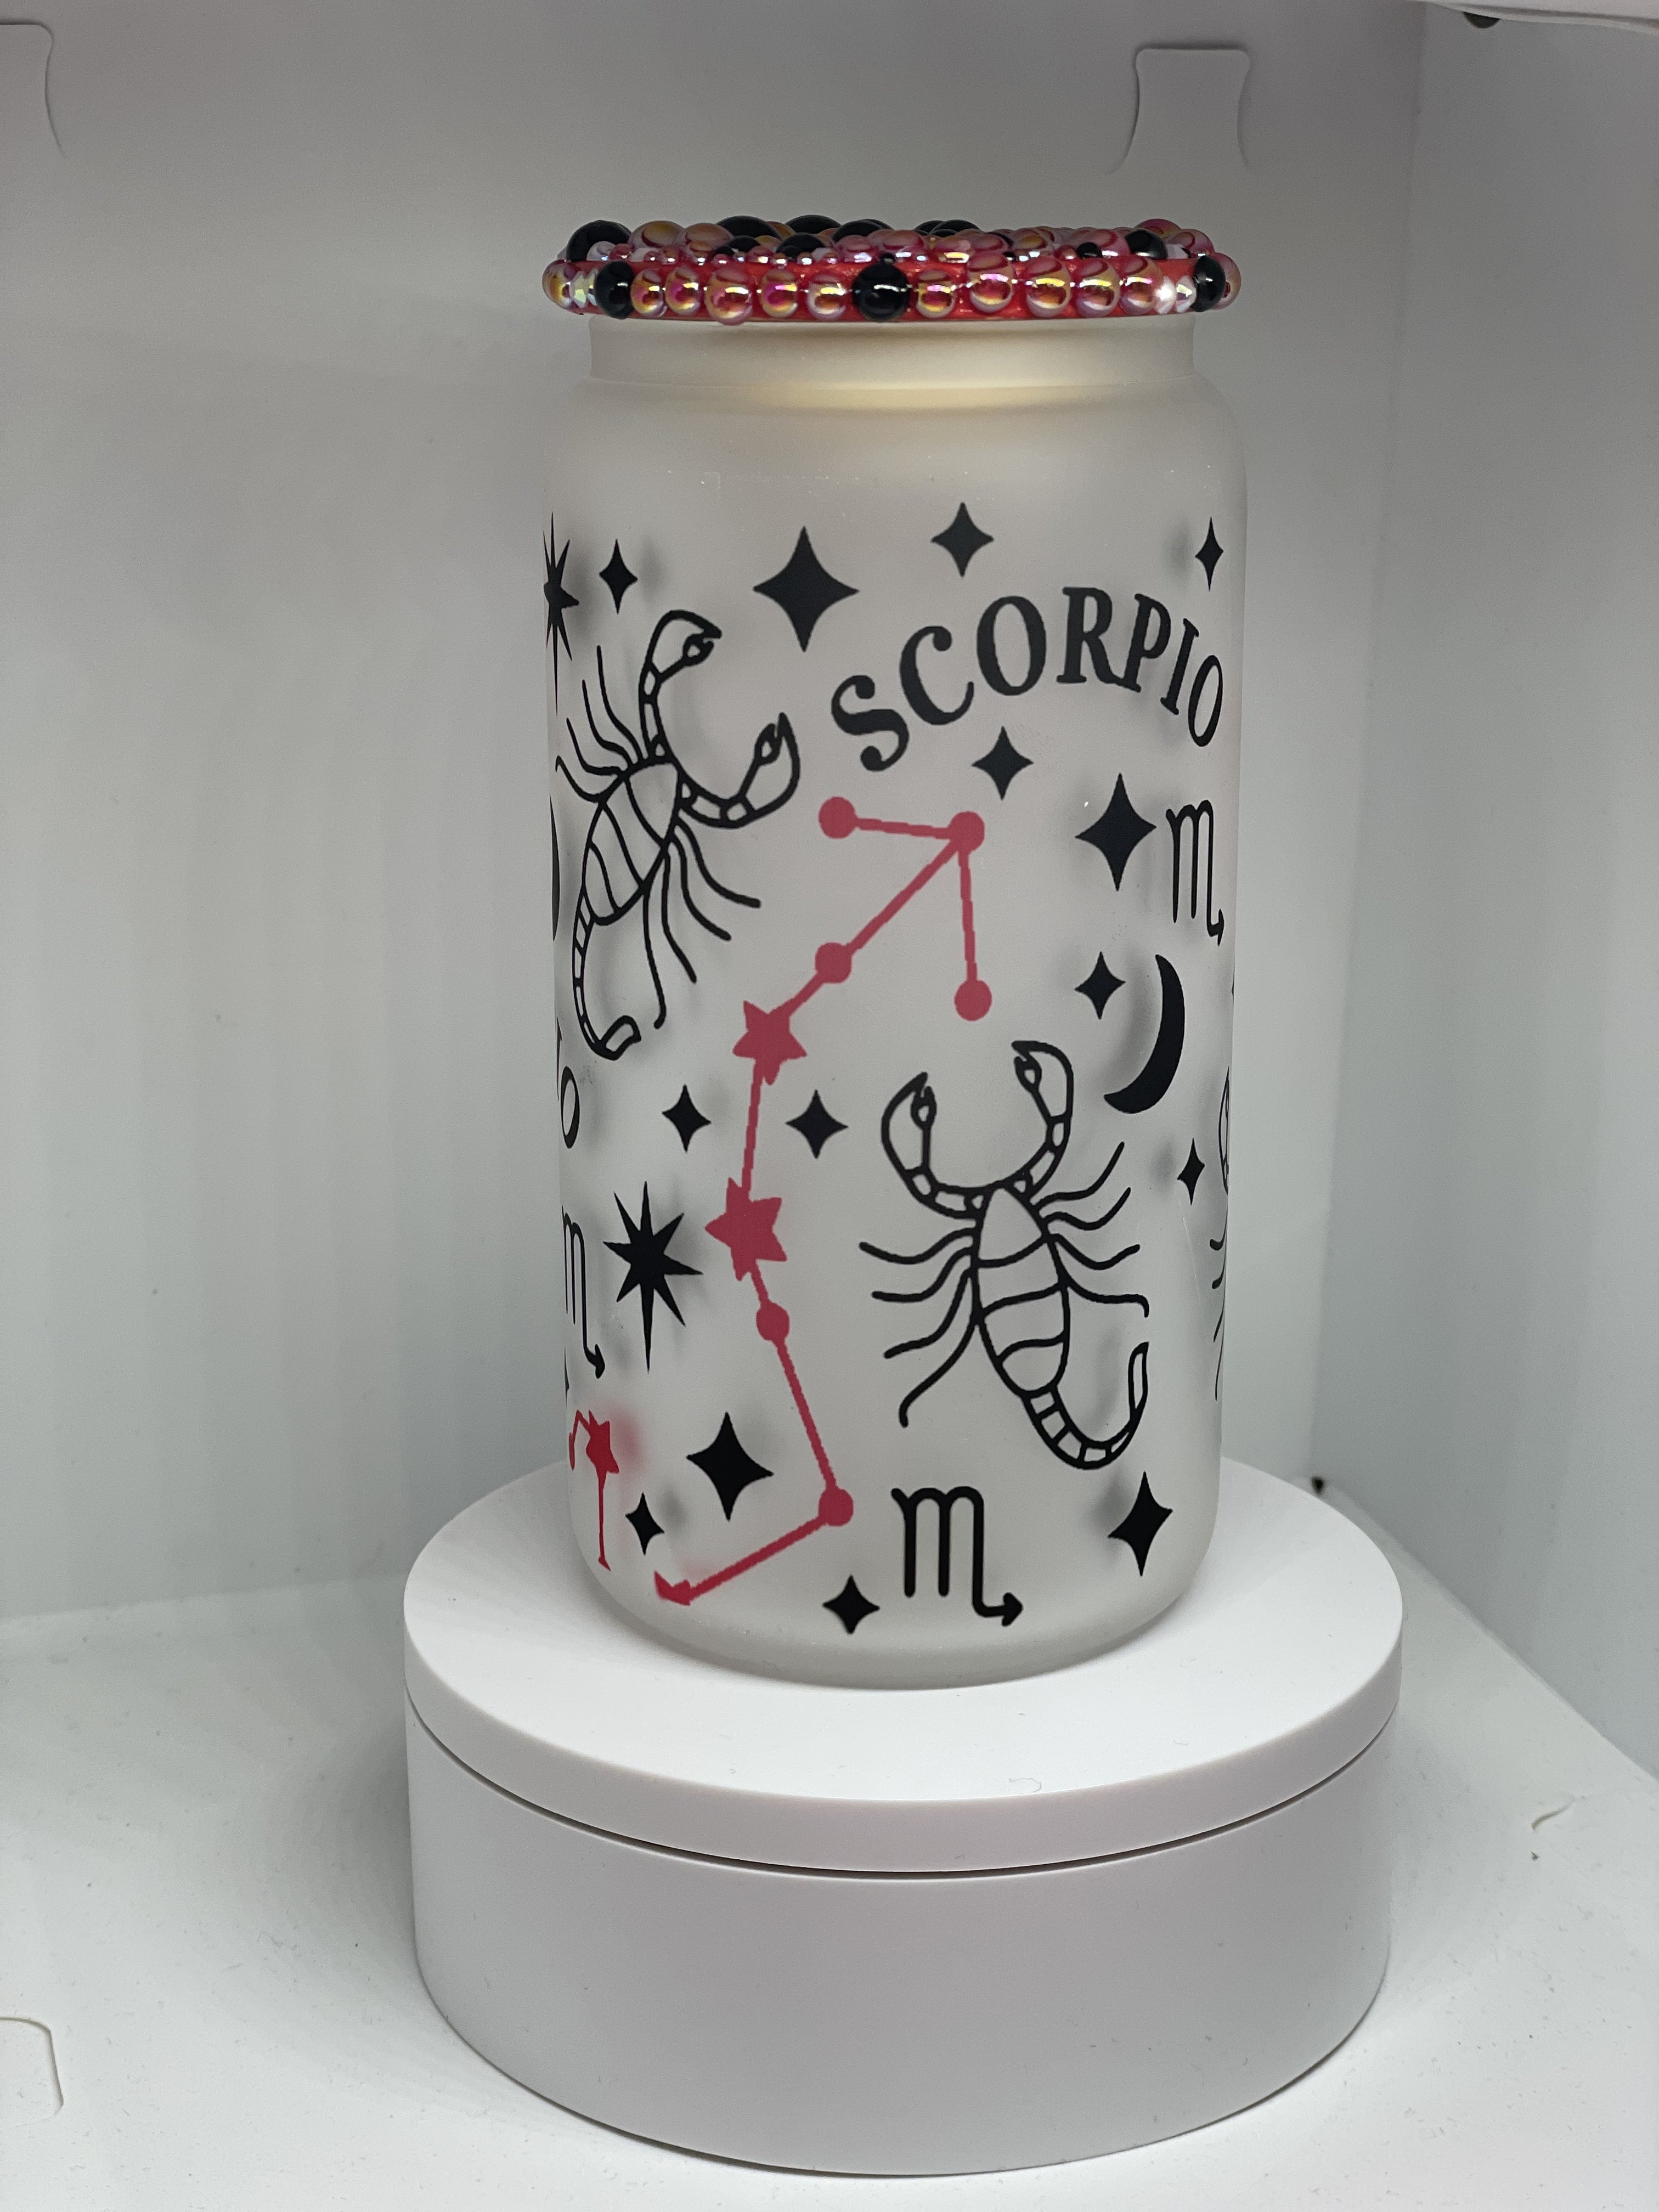 Scorpio Glass Cup